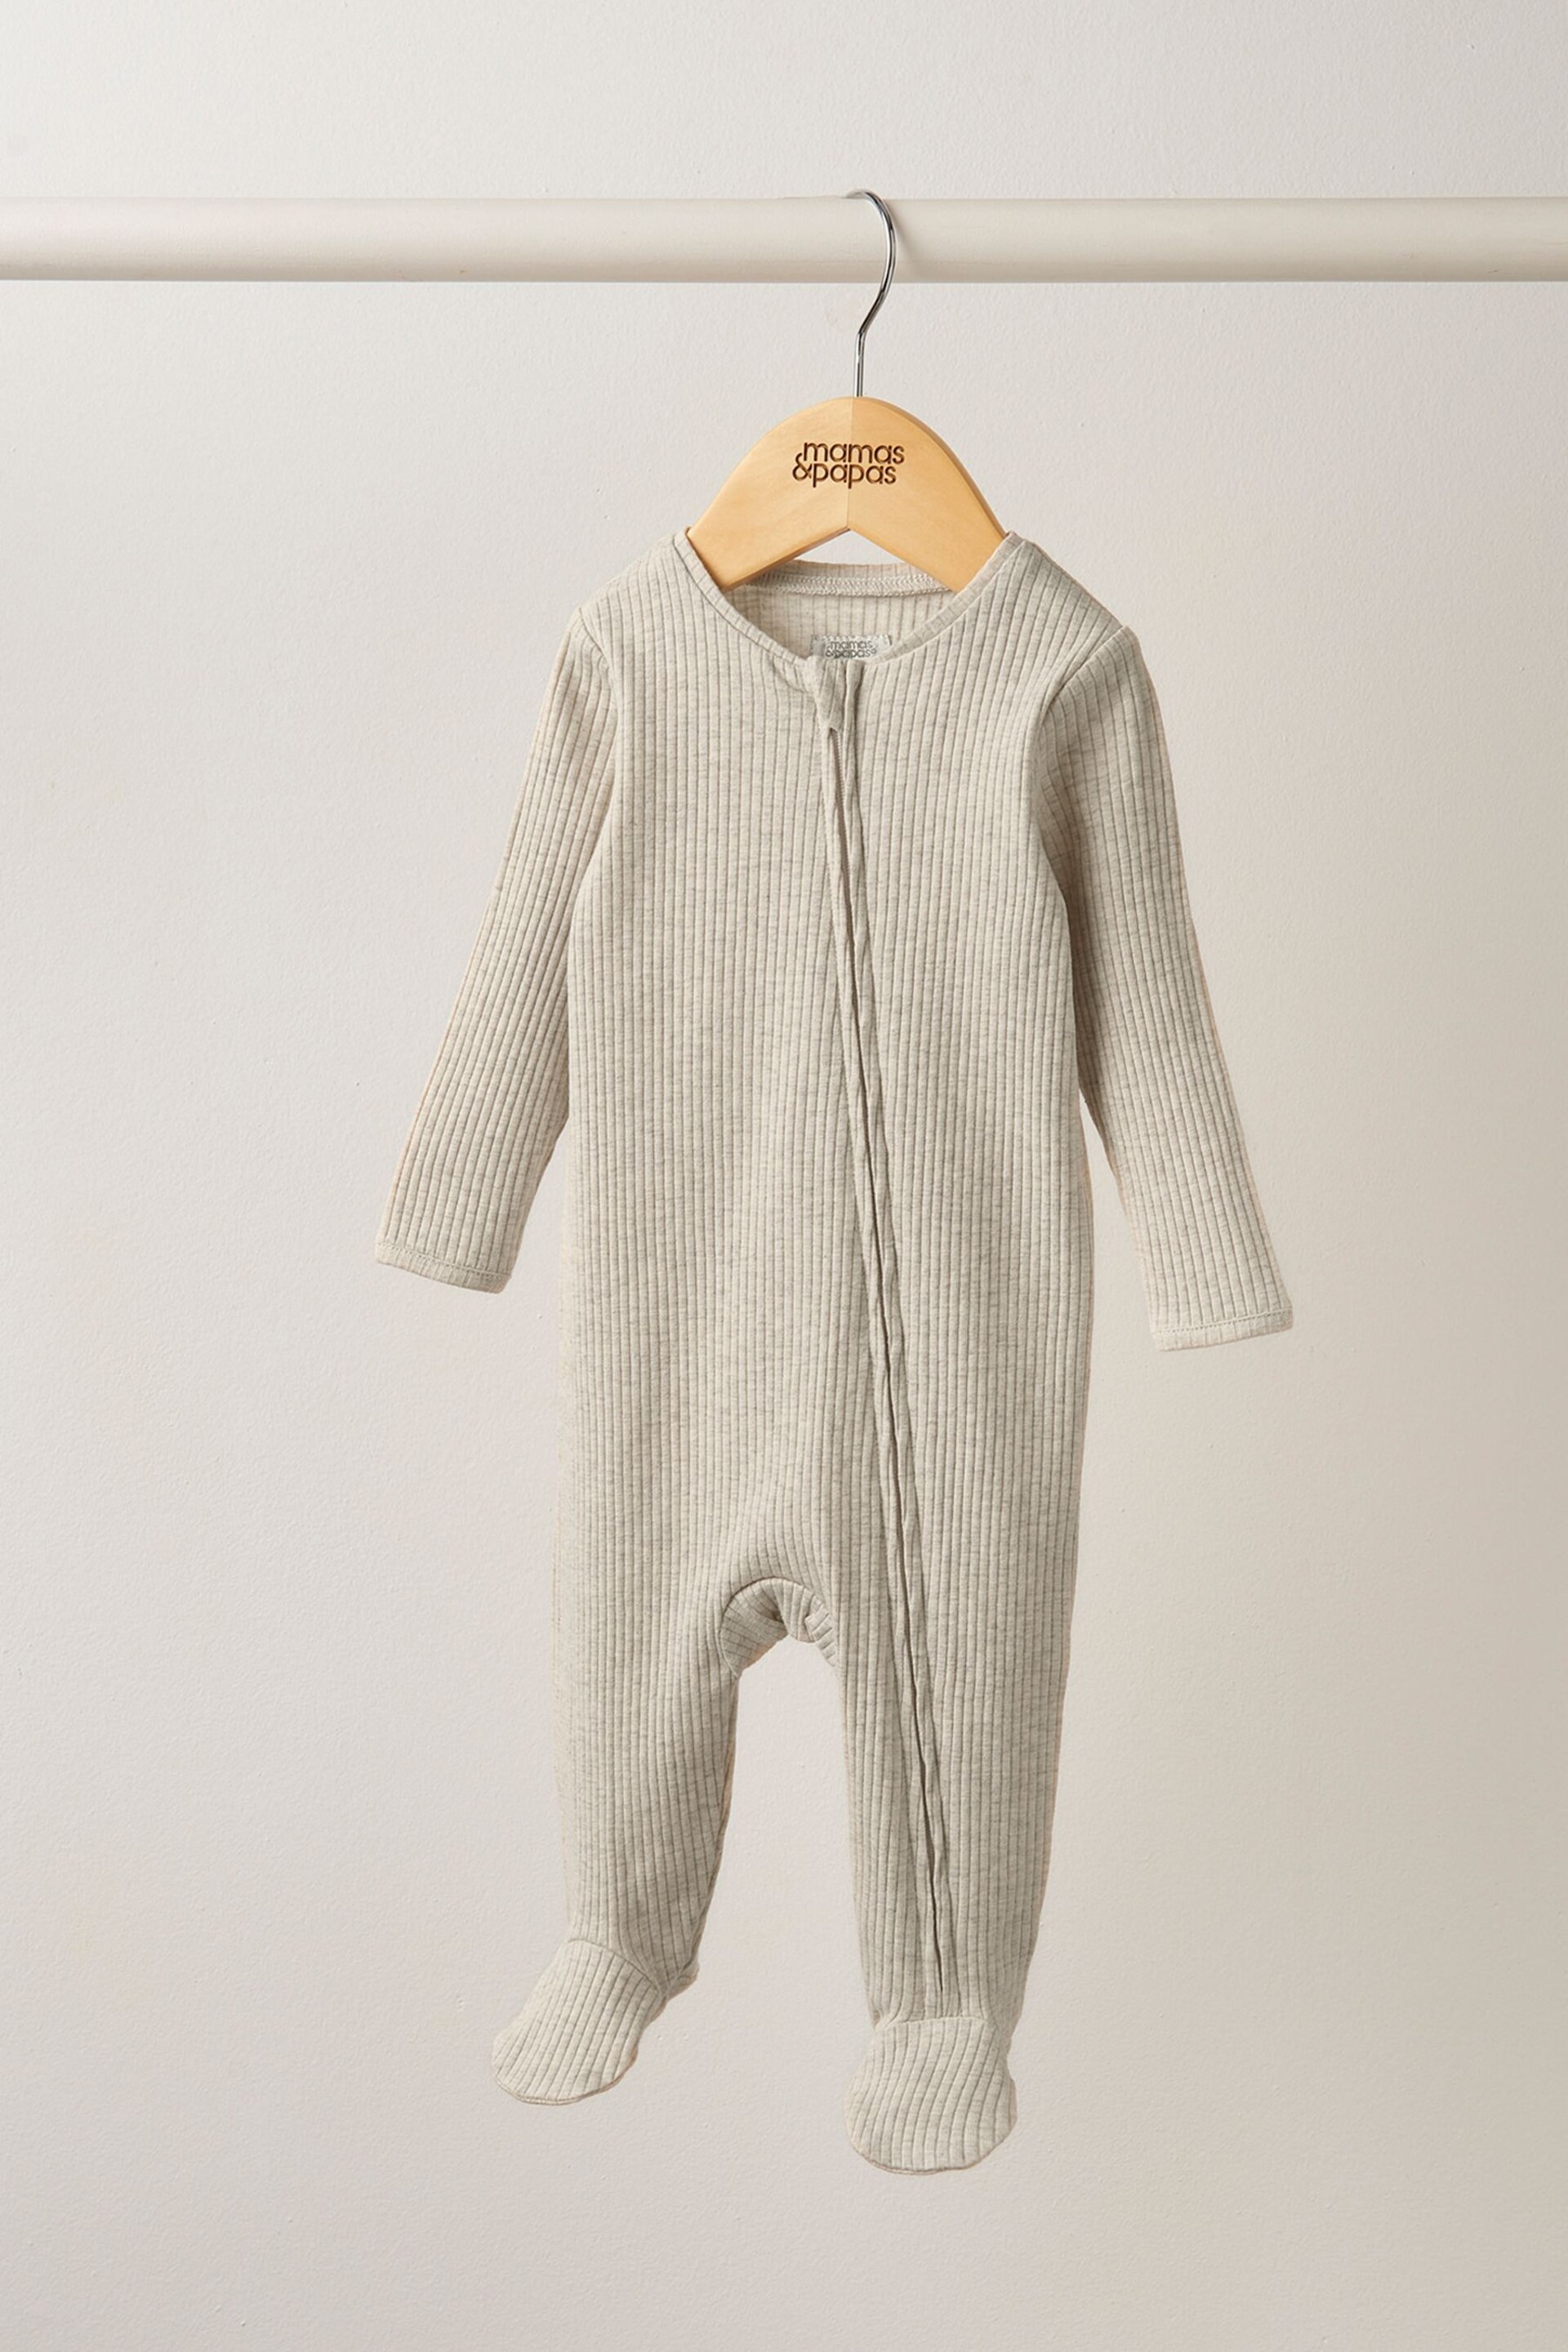 Mamas & Papas Newborn Unisex Brown Basics Oatmeal Zip Sleepsuit - Image 1 of 4